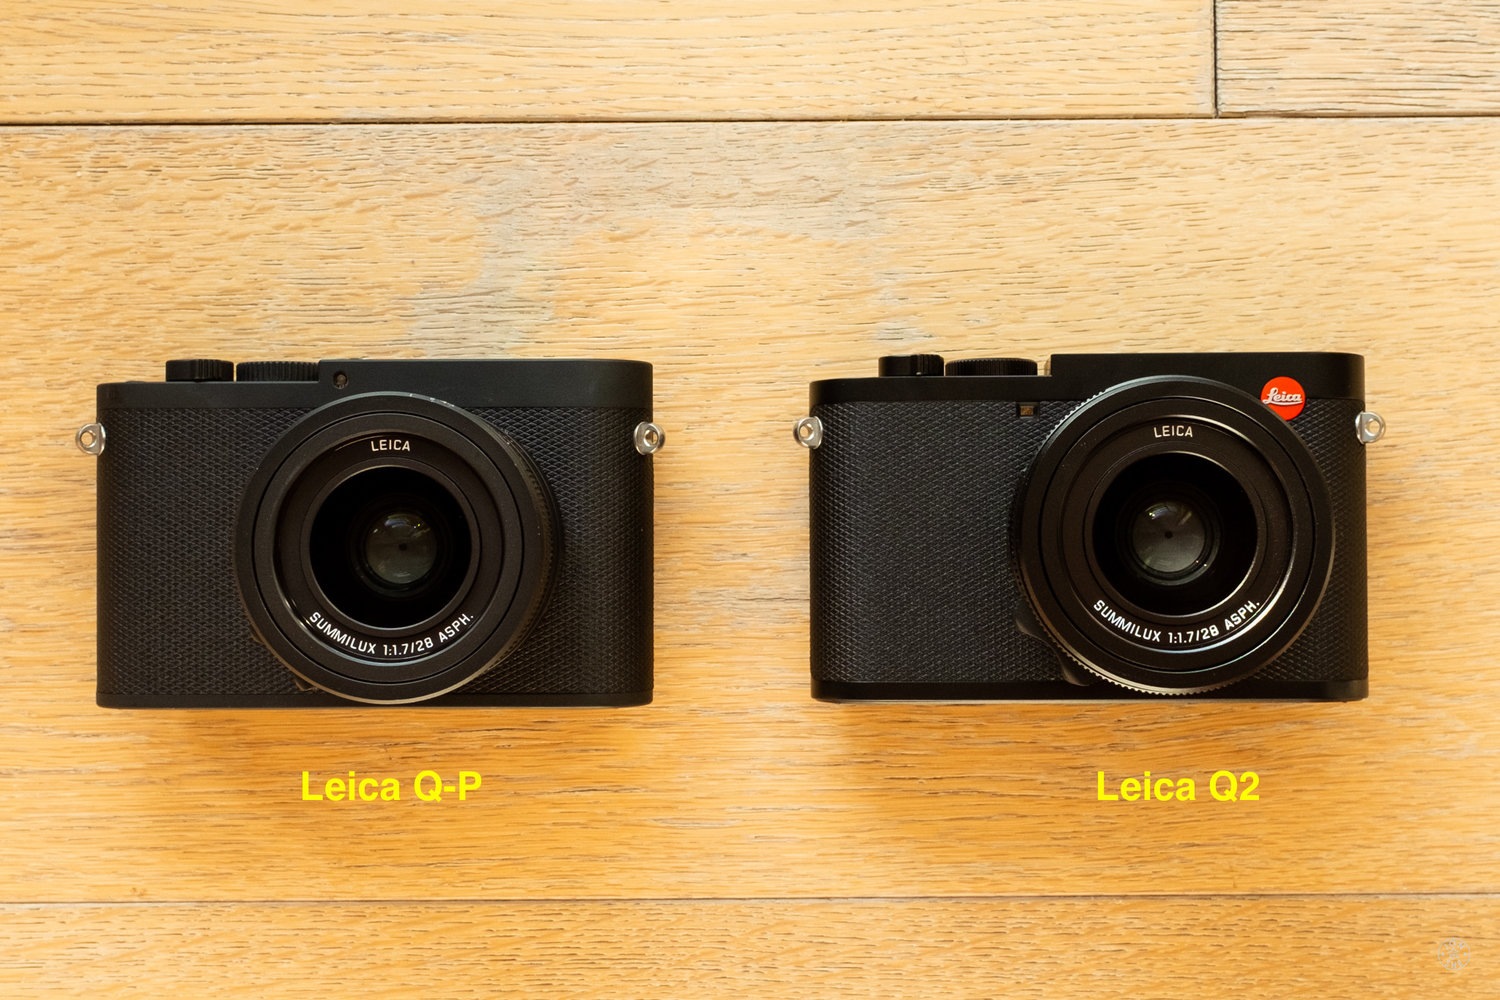 Leica Q2 camera review - Leica Rumors